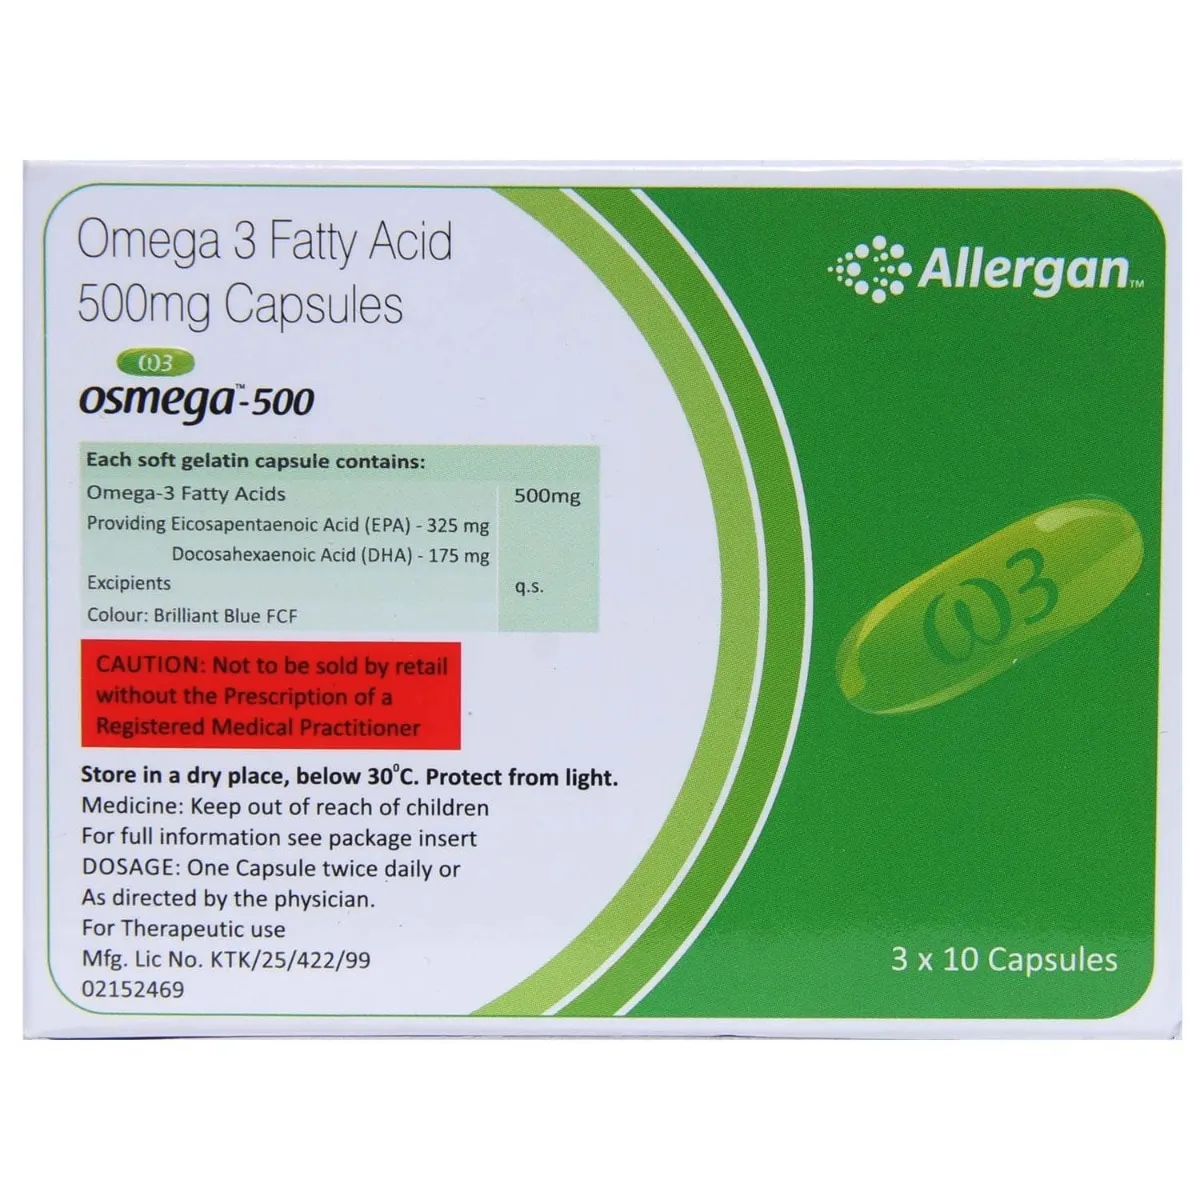 Osmega 500mg Omega-3 Fatty Acid Soft Gelatin Capsule